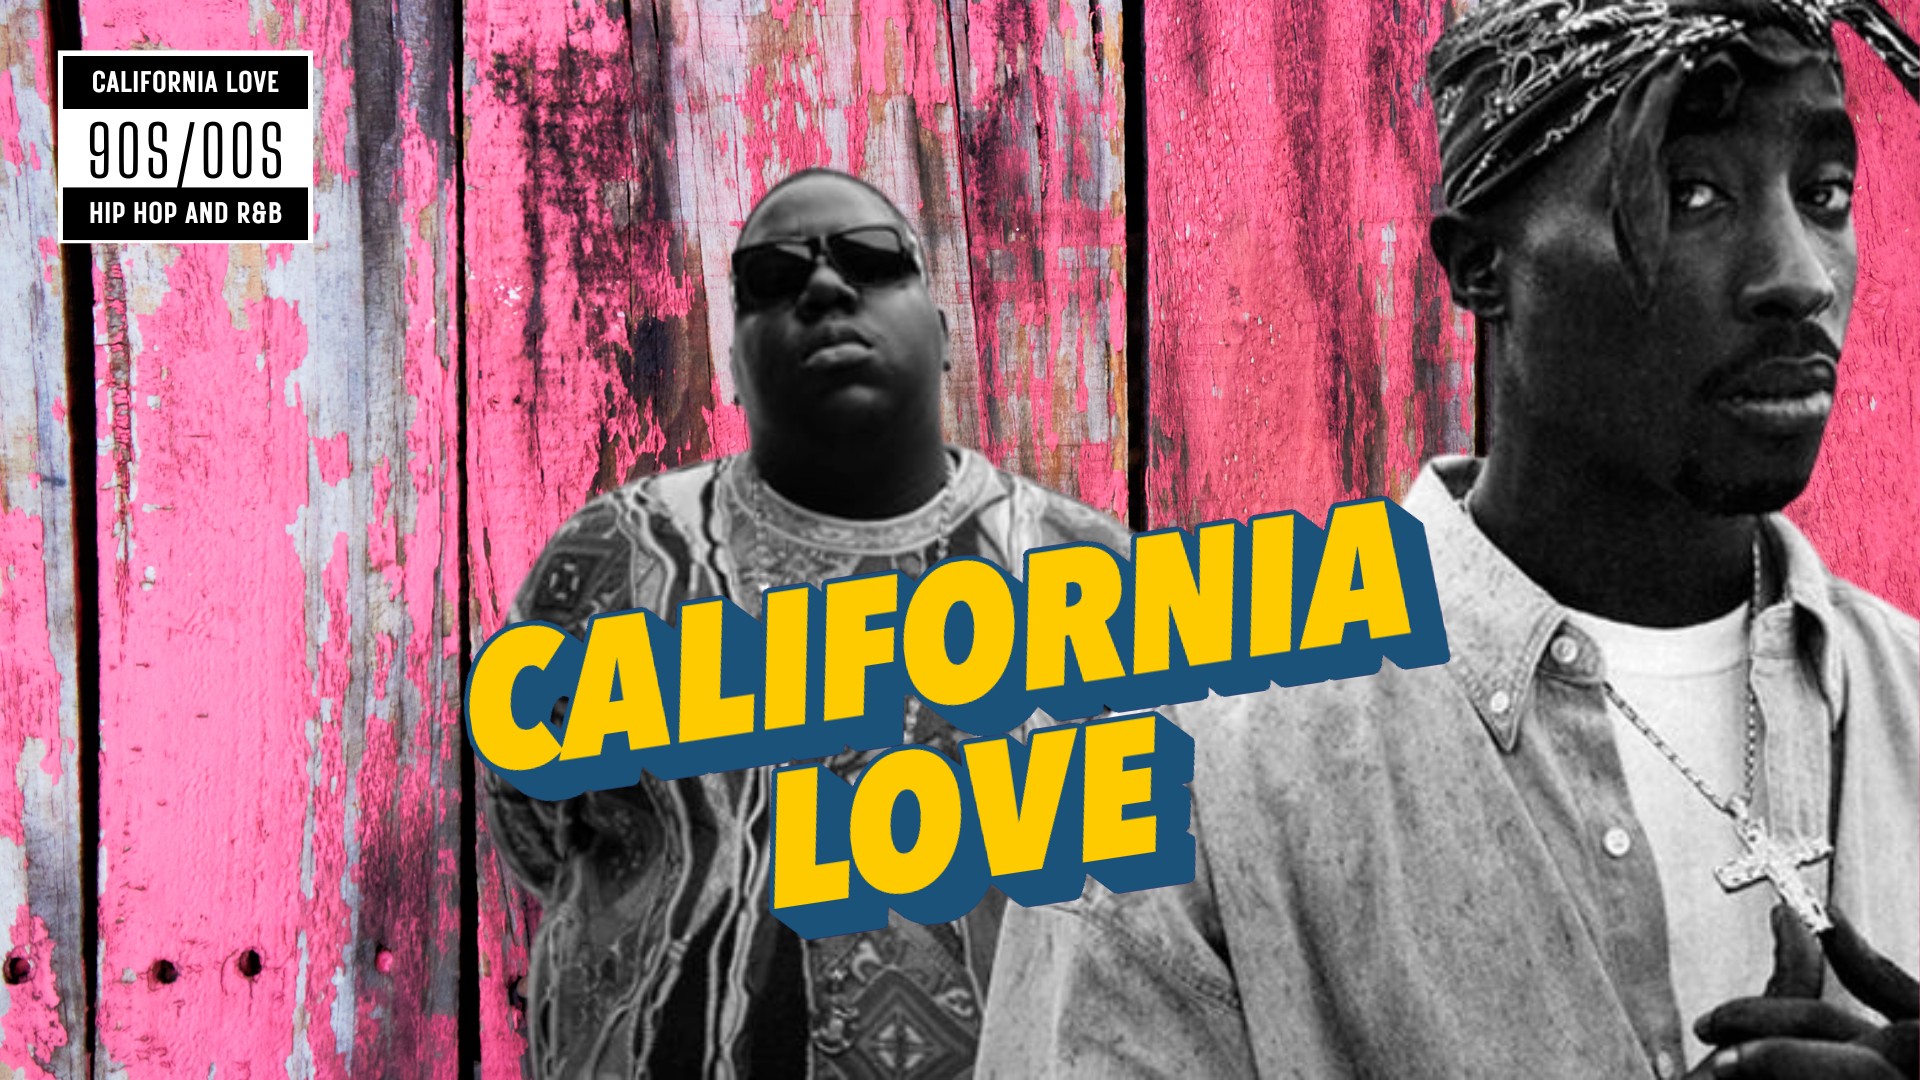 California Love (90s/00s Hip Hop and R&B) Dublin at The Workman's